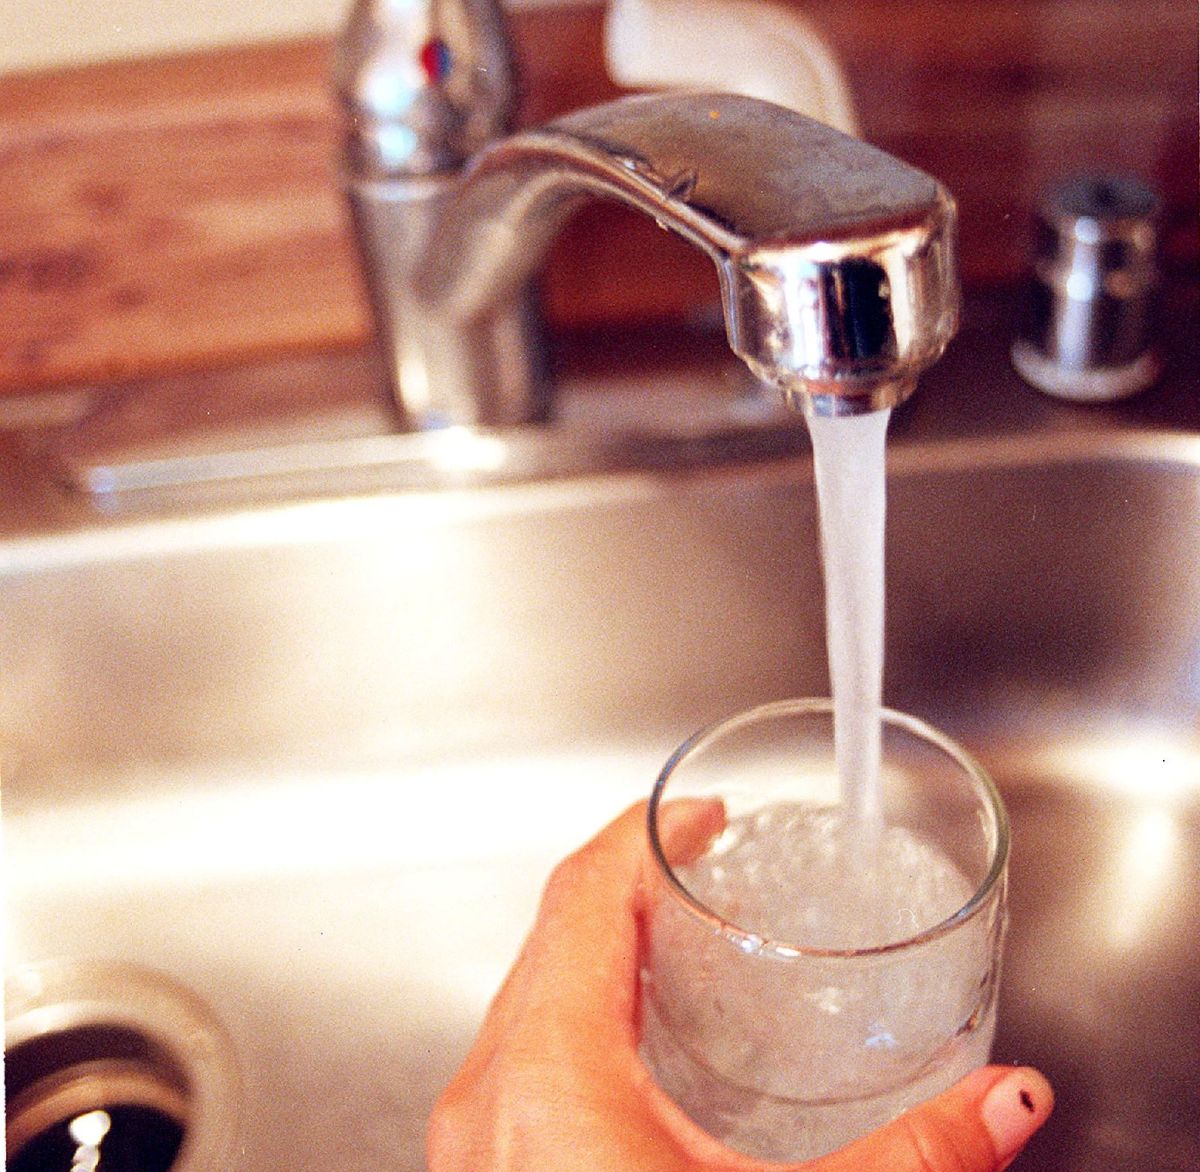 El LADWP asegura que tomar agua del grifo es saludable.